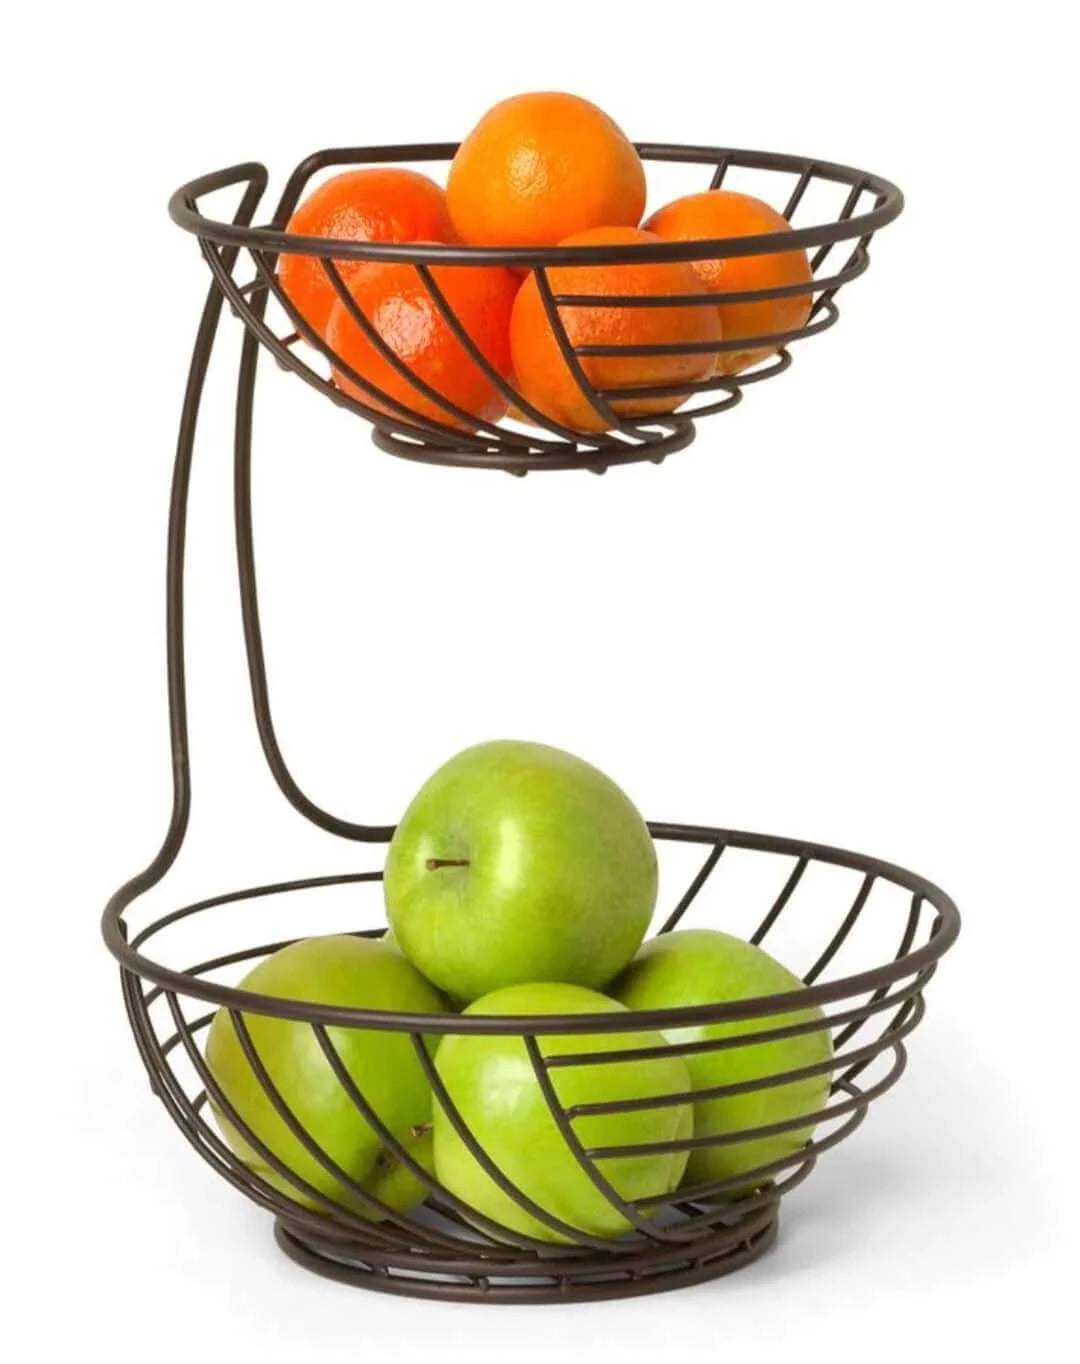 Fruit Basket Stand for Storing & Organizing Vegetables, Eggs, and More -STR